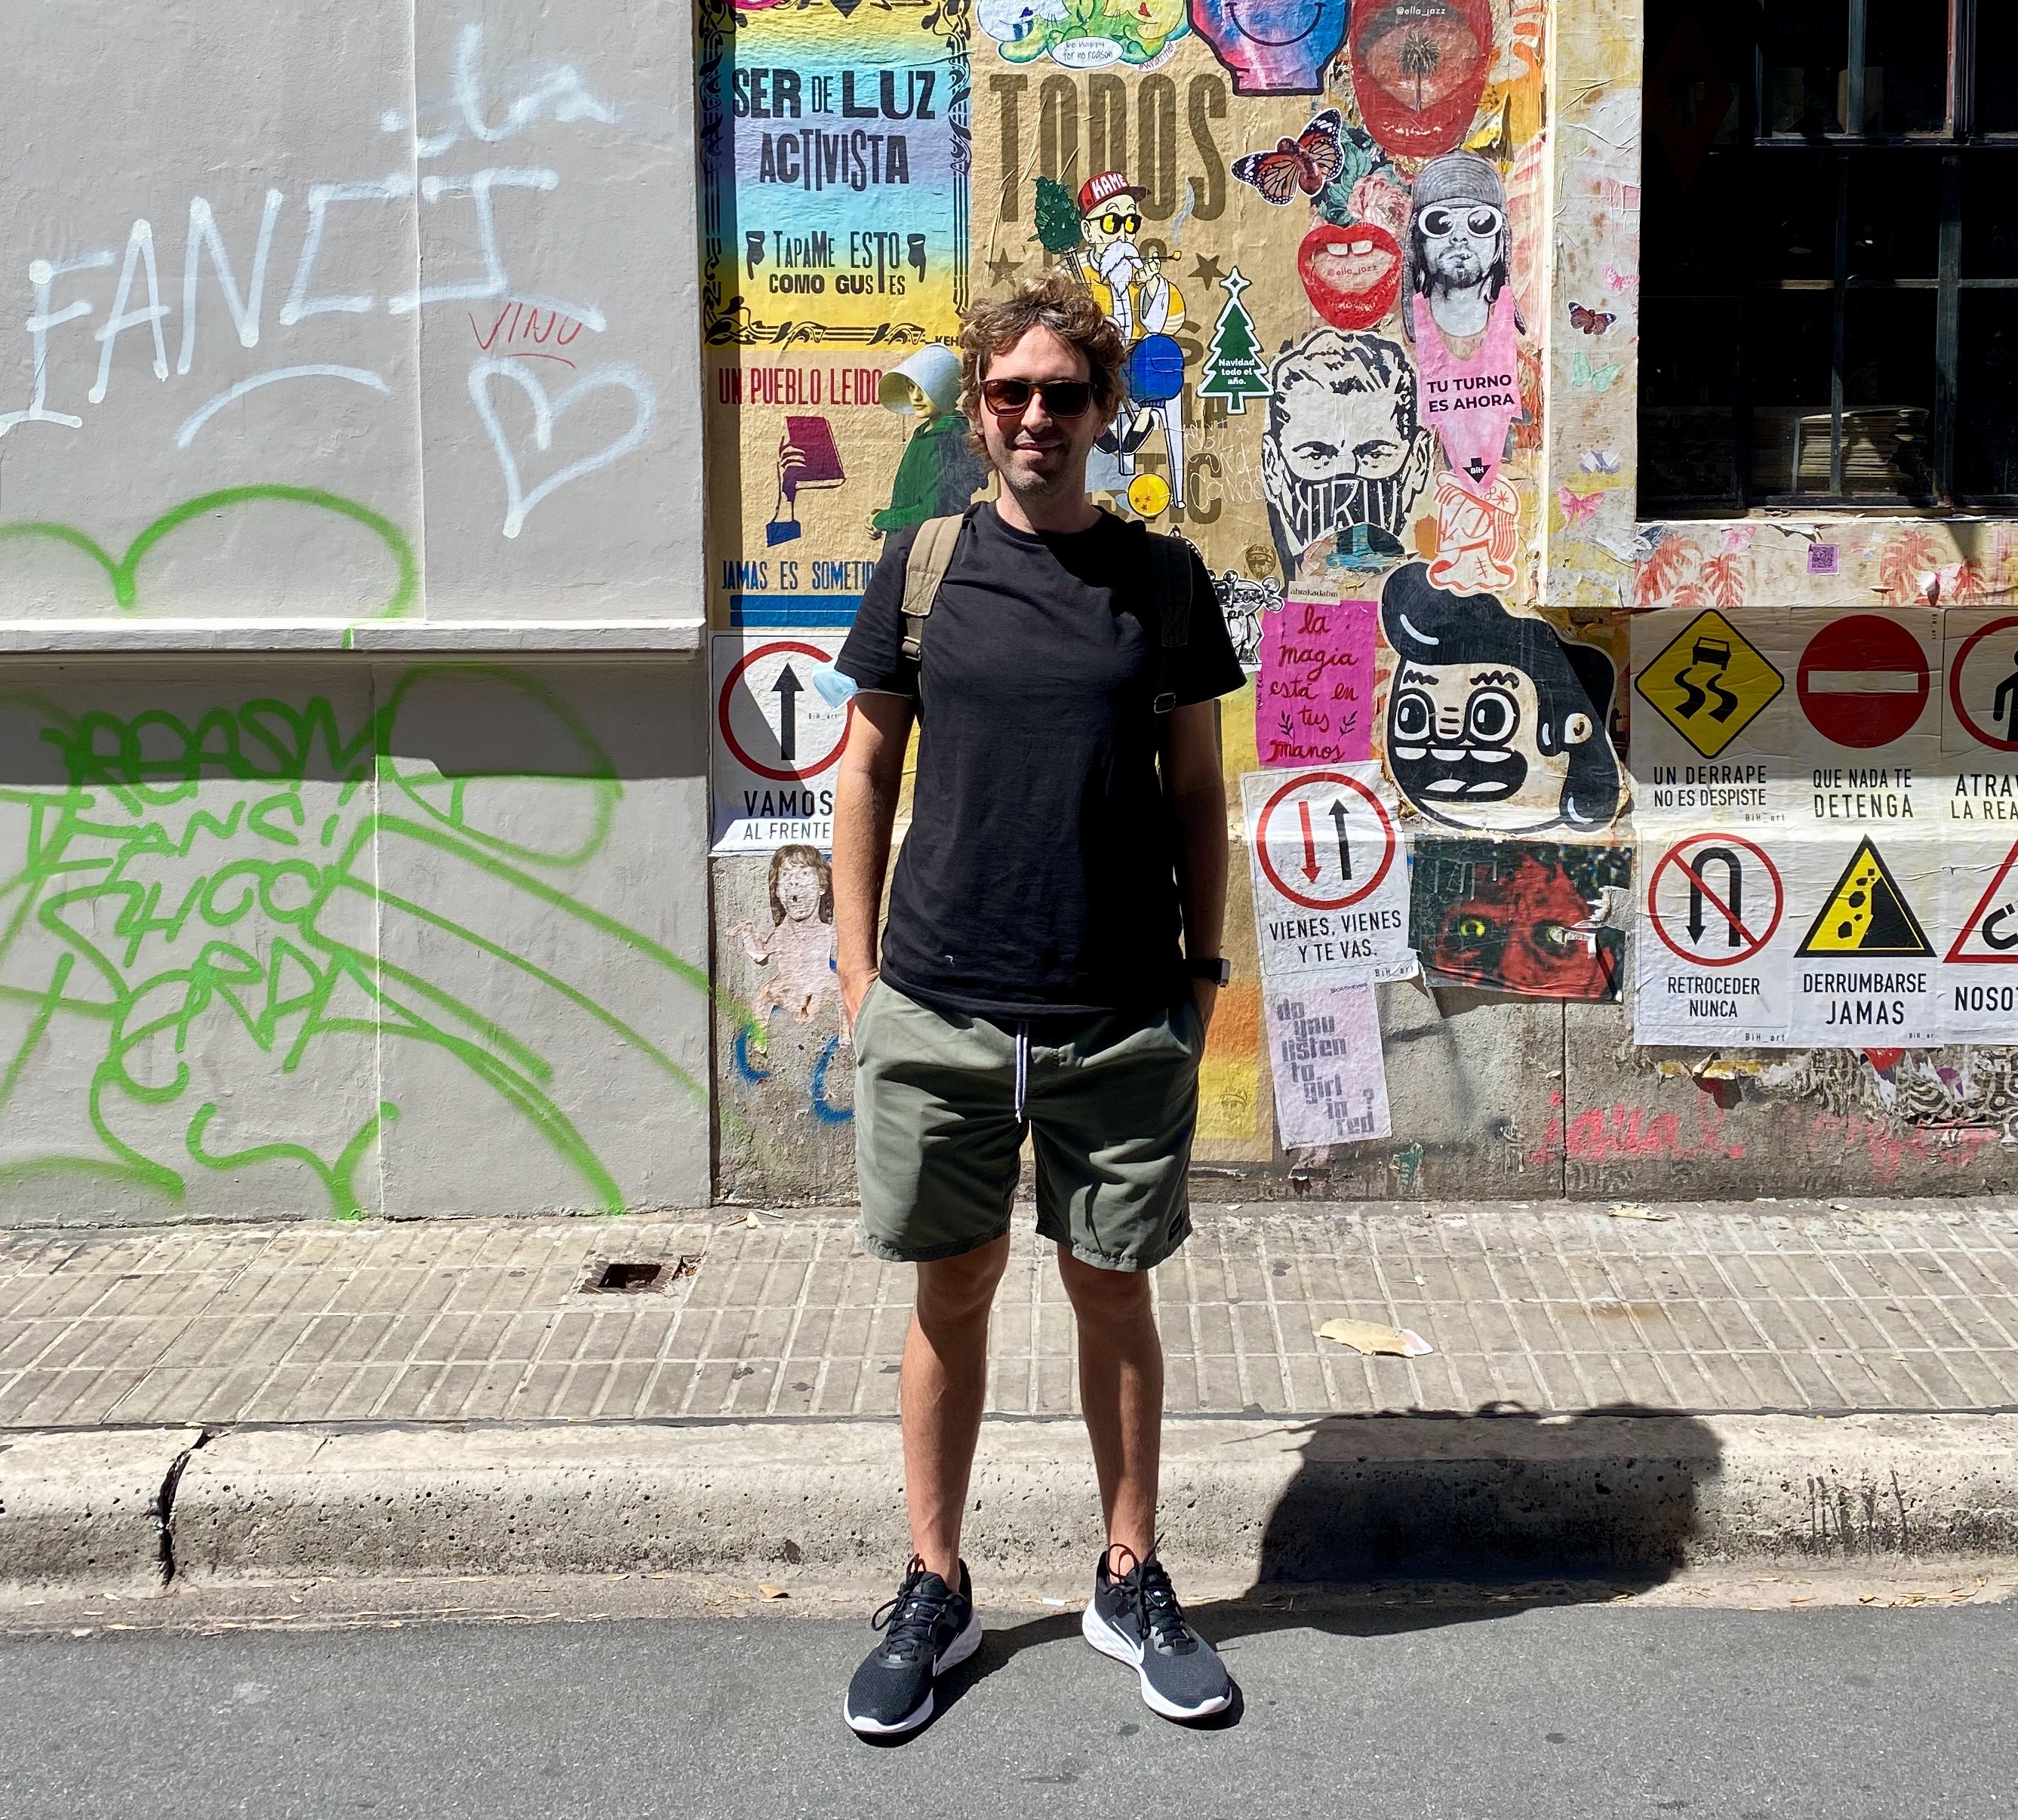 Juan standing in a astreet with murals behind him